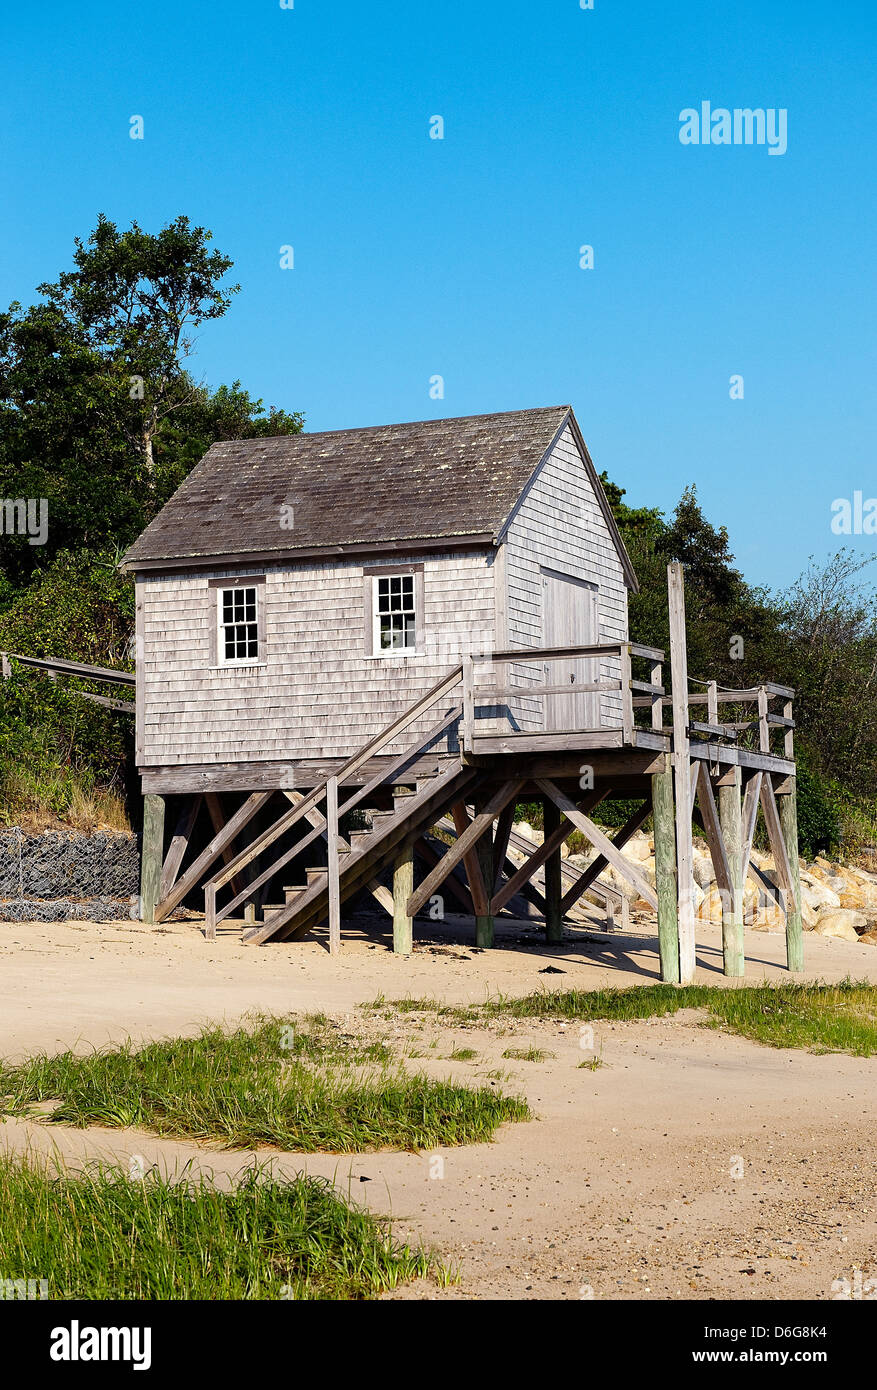 Rustic boathouse on the beach, Chatham, Cape Cod, Massachusetts, USA Stock Photo